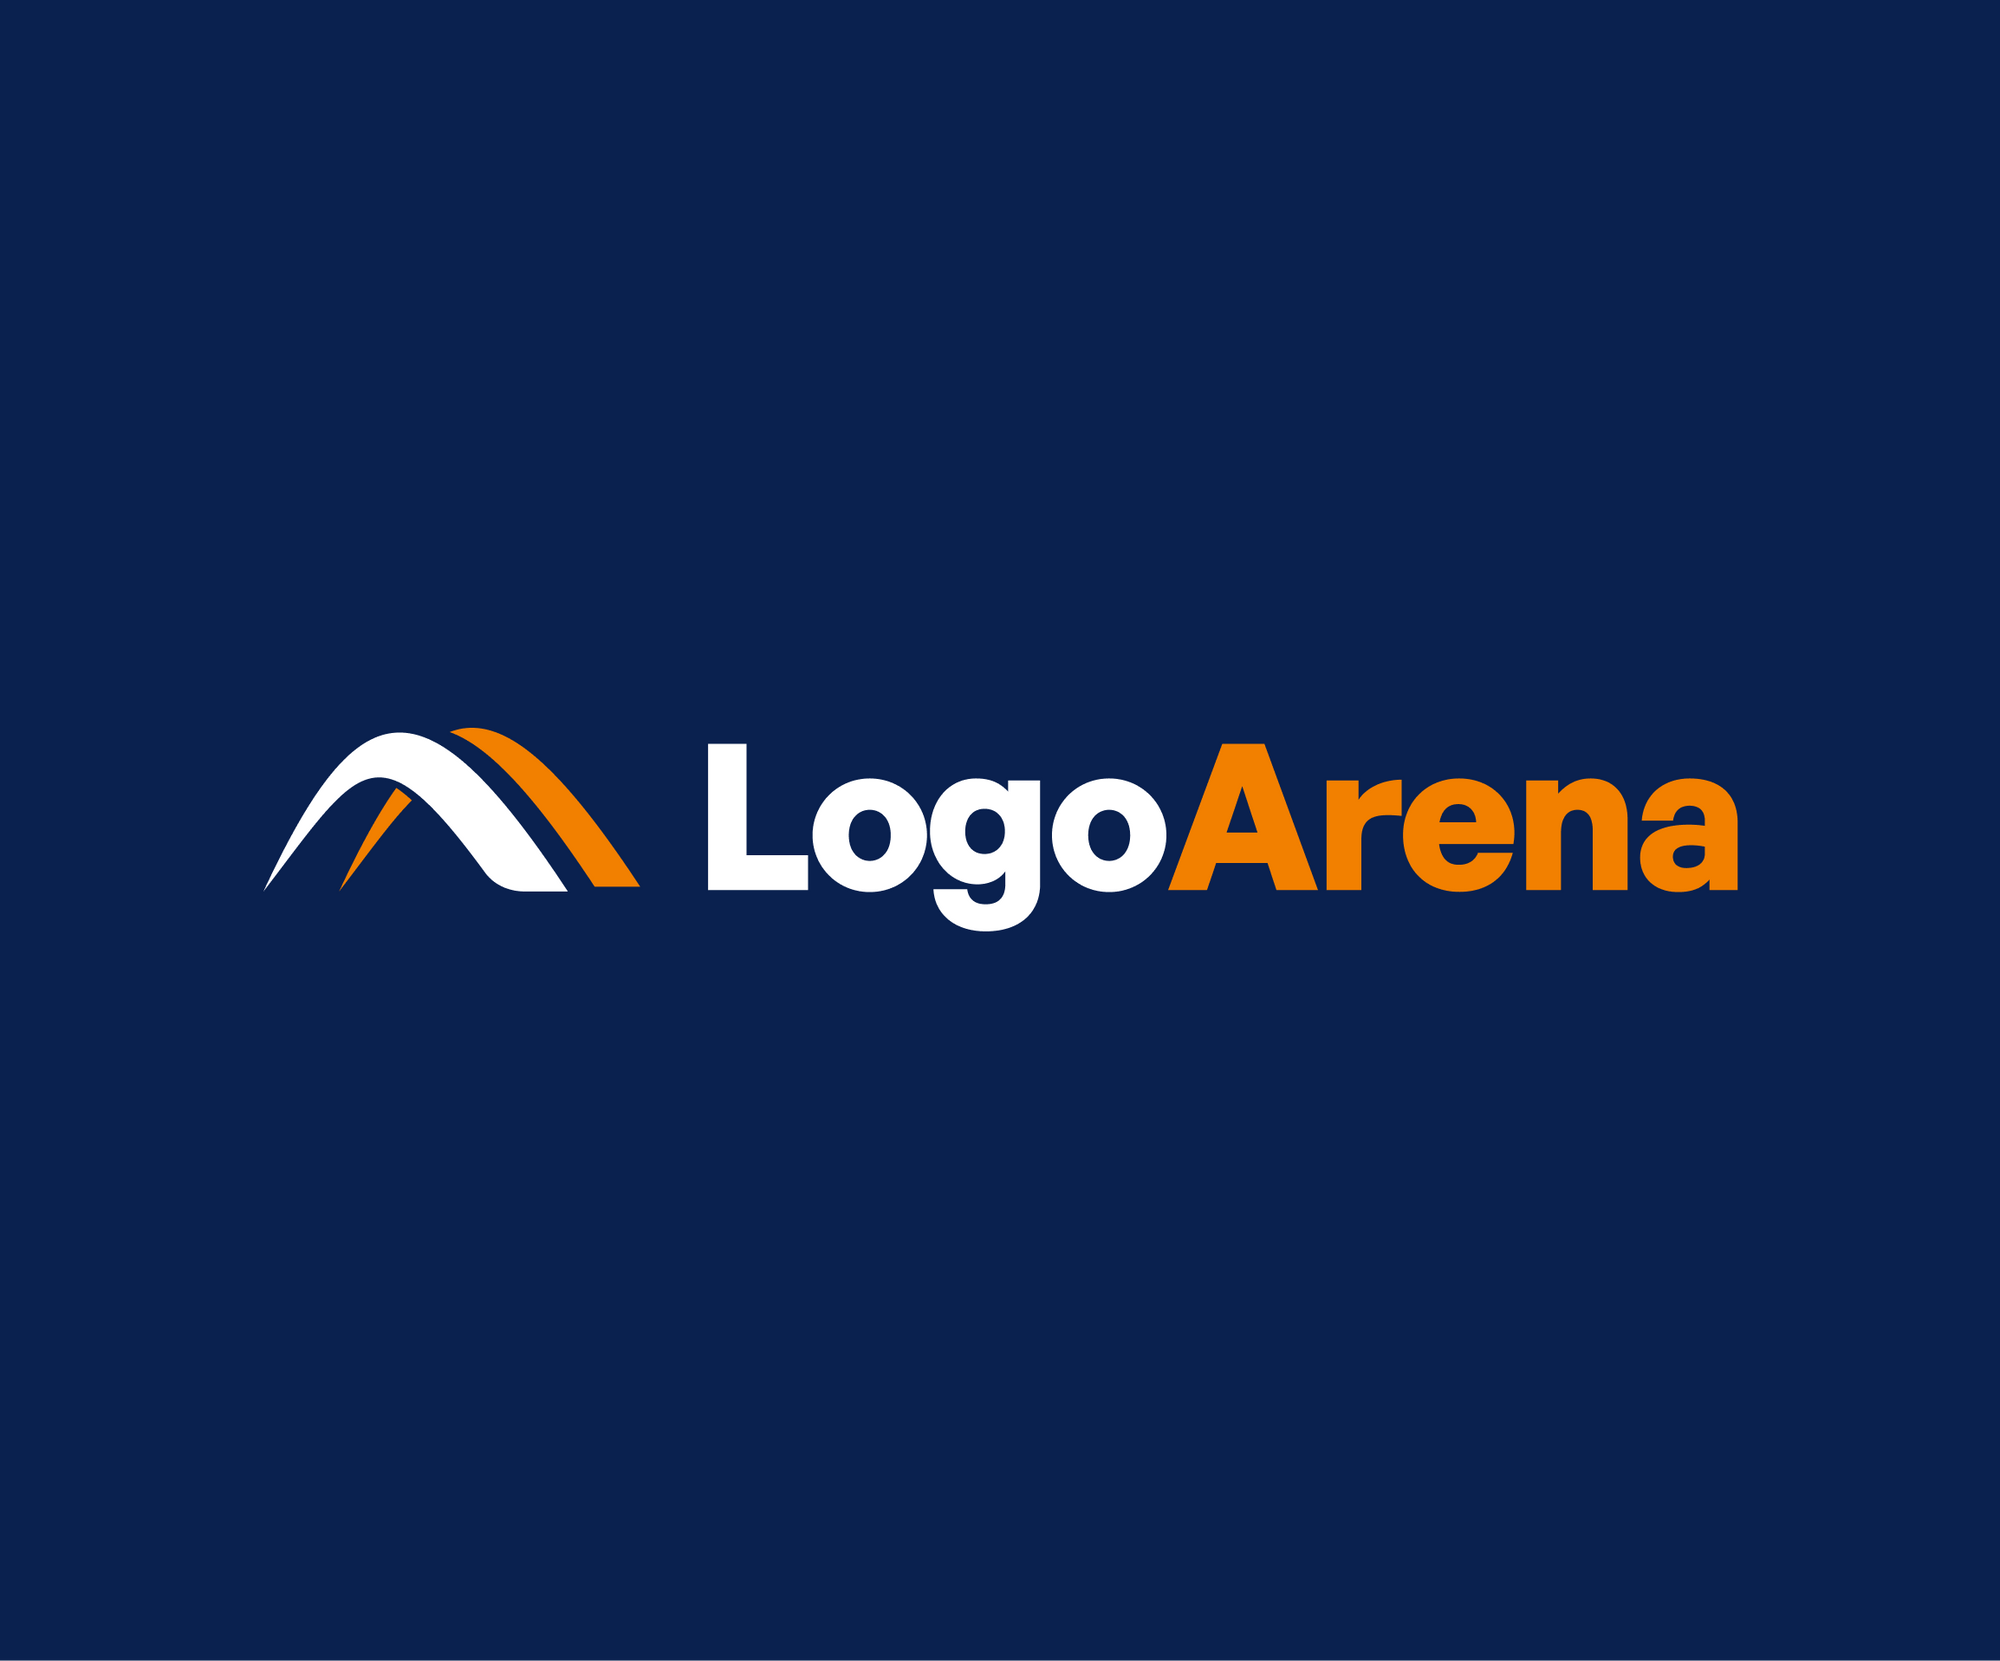 Logo Arena Rebrand: Bridging Past and Future